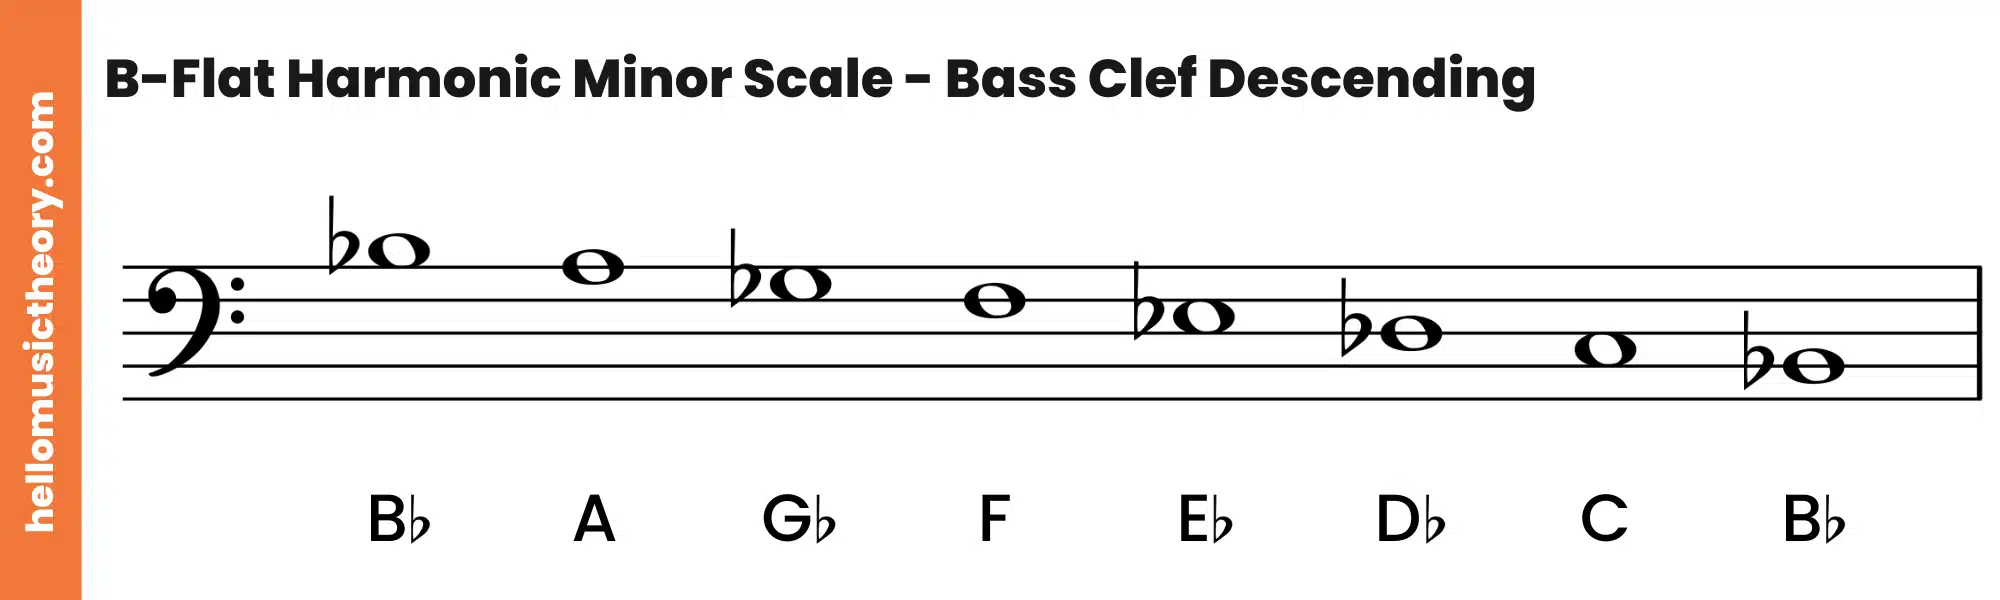 B-Flat Harmonic Minor Scale Bass Clef Descending